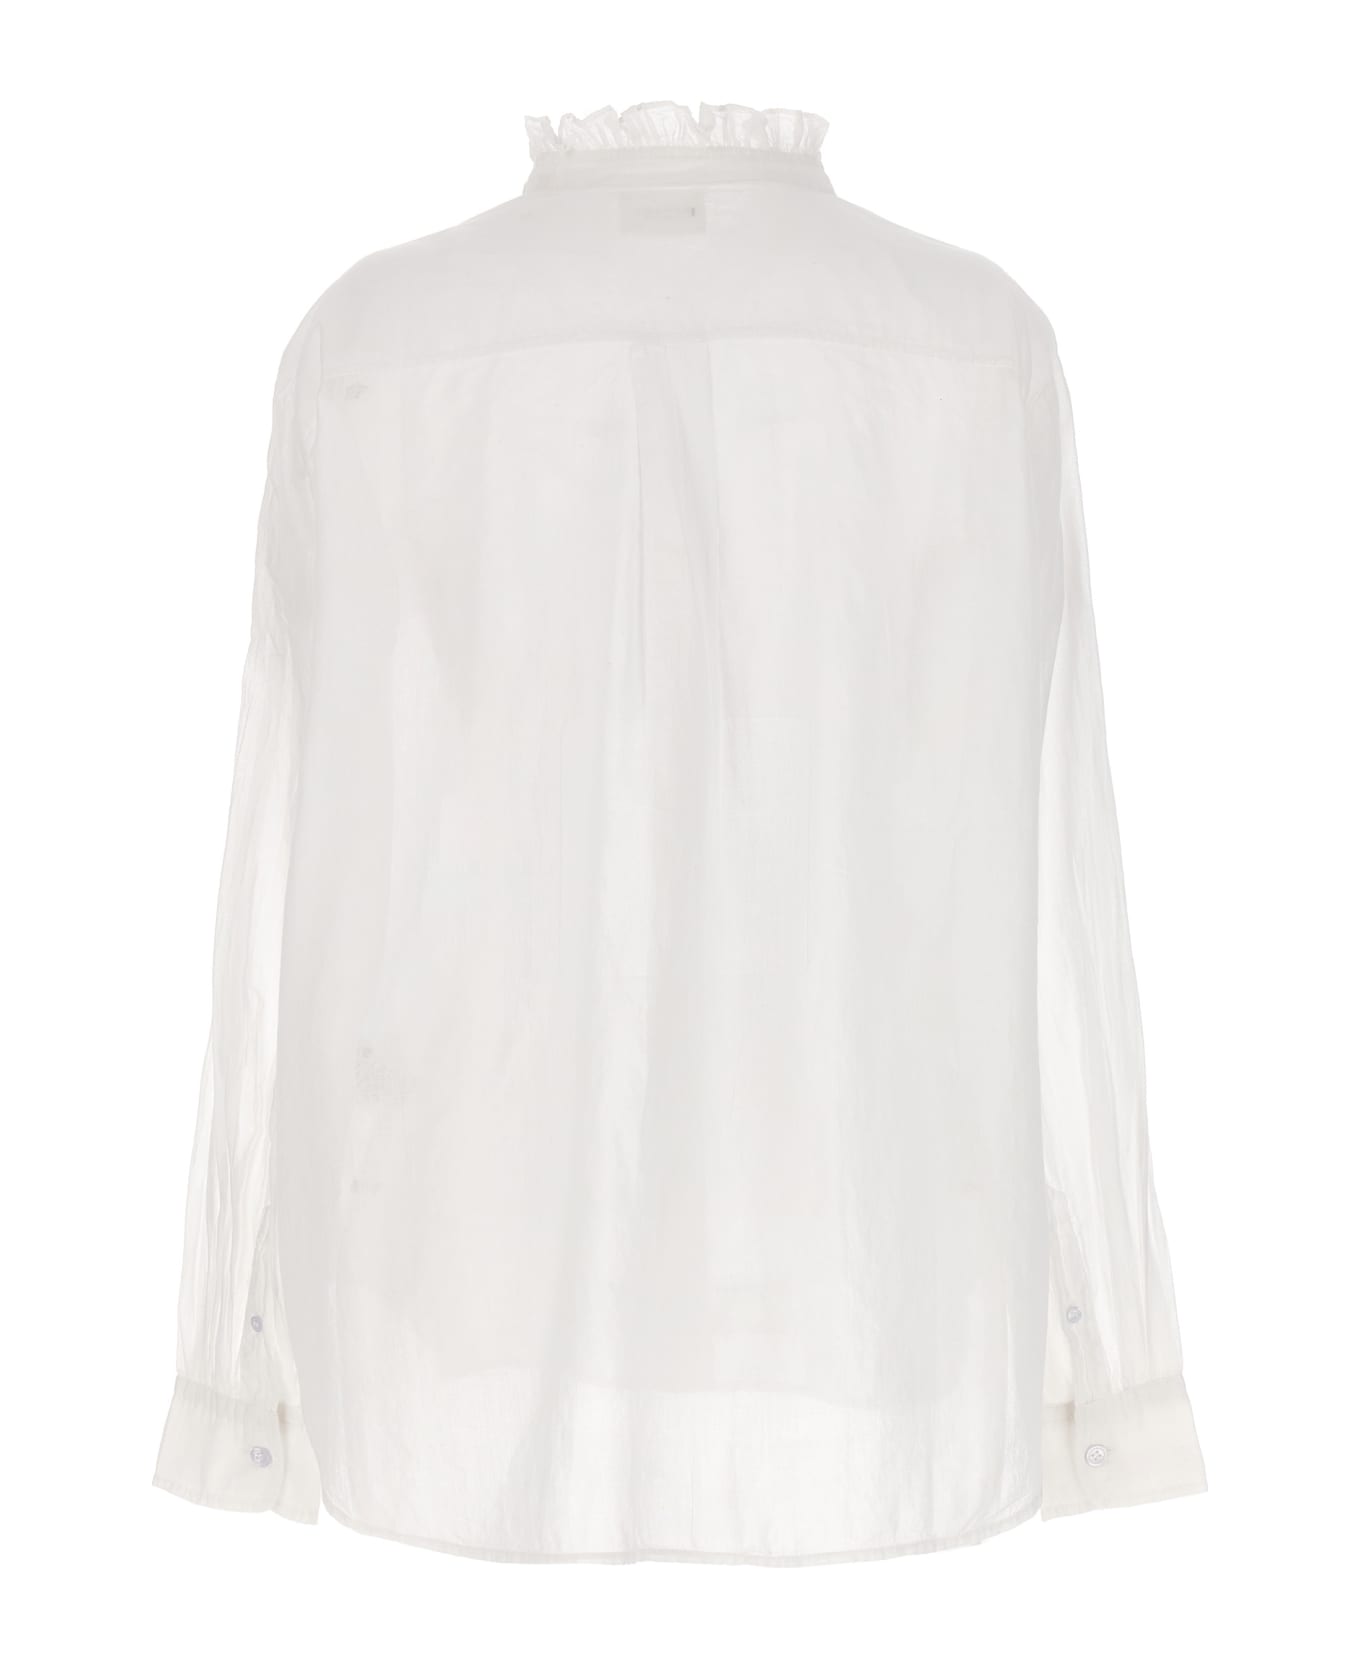 Marant Étoile 'gamble' Shirt - White シャツ